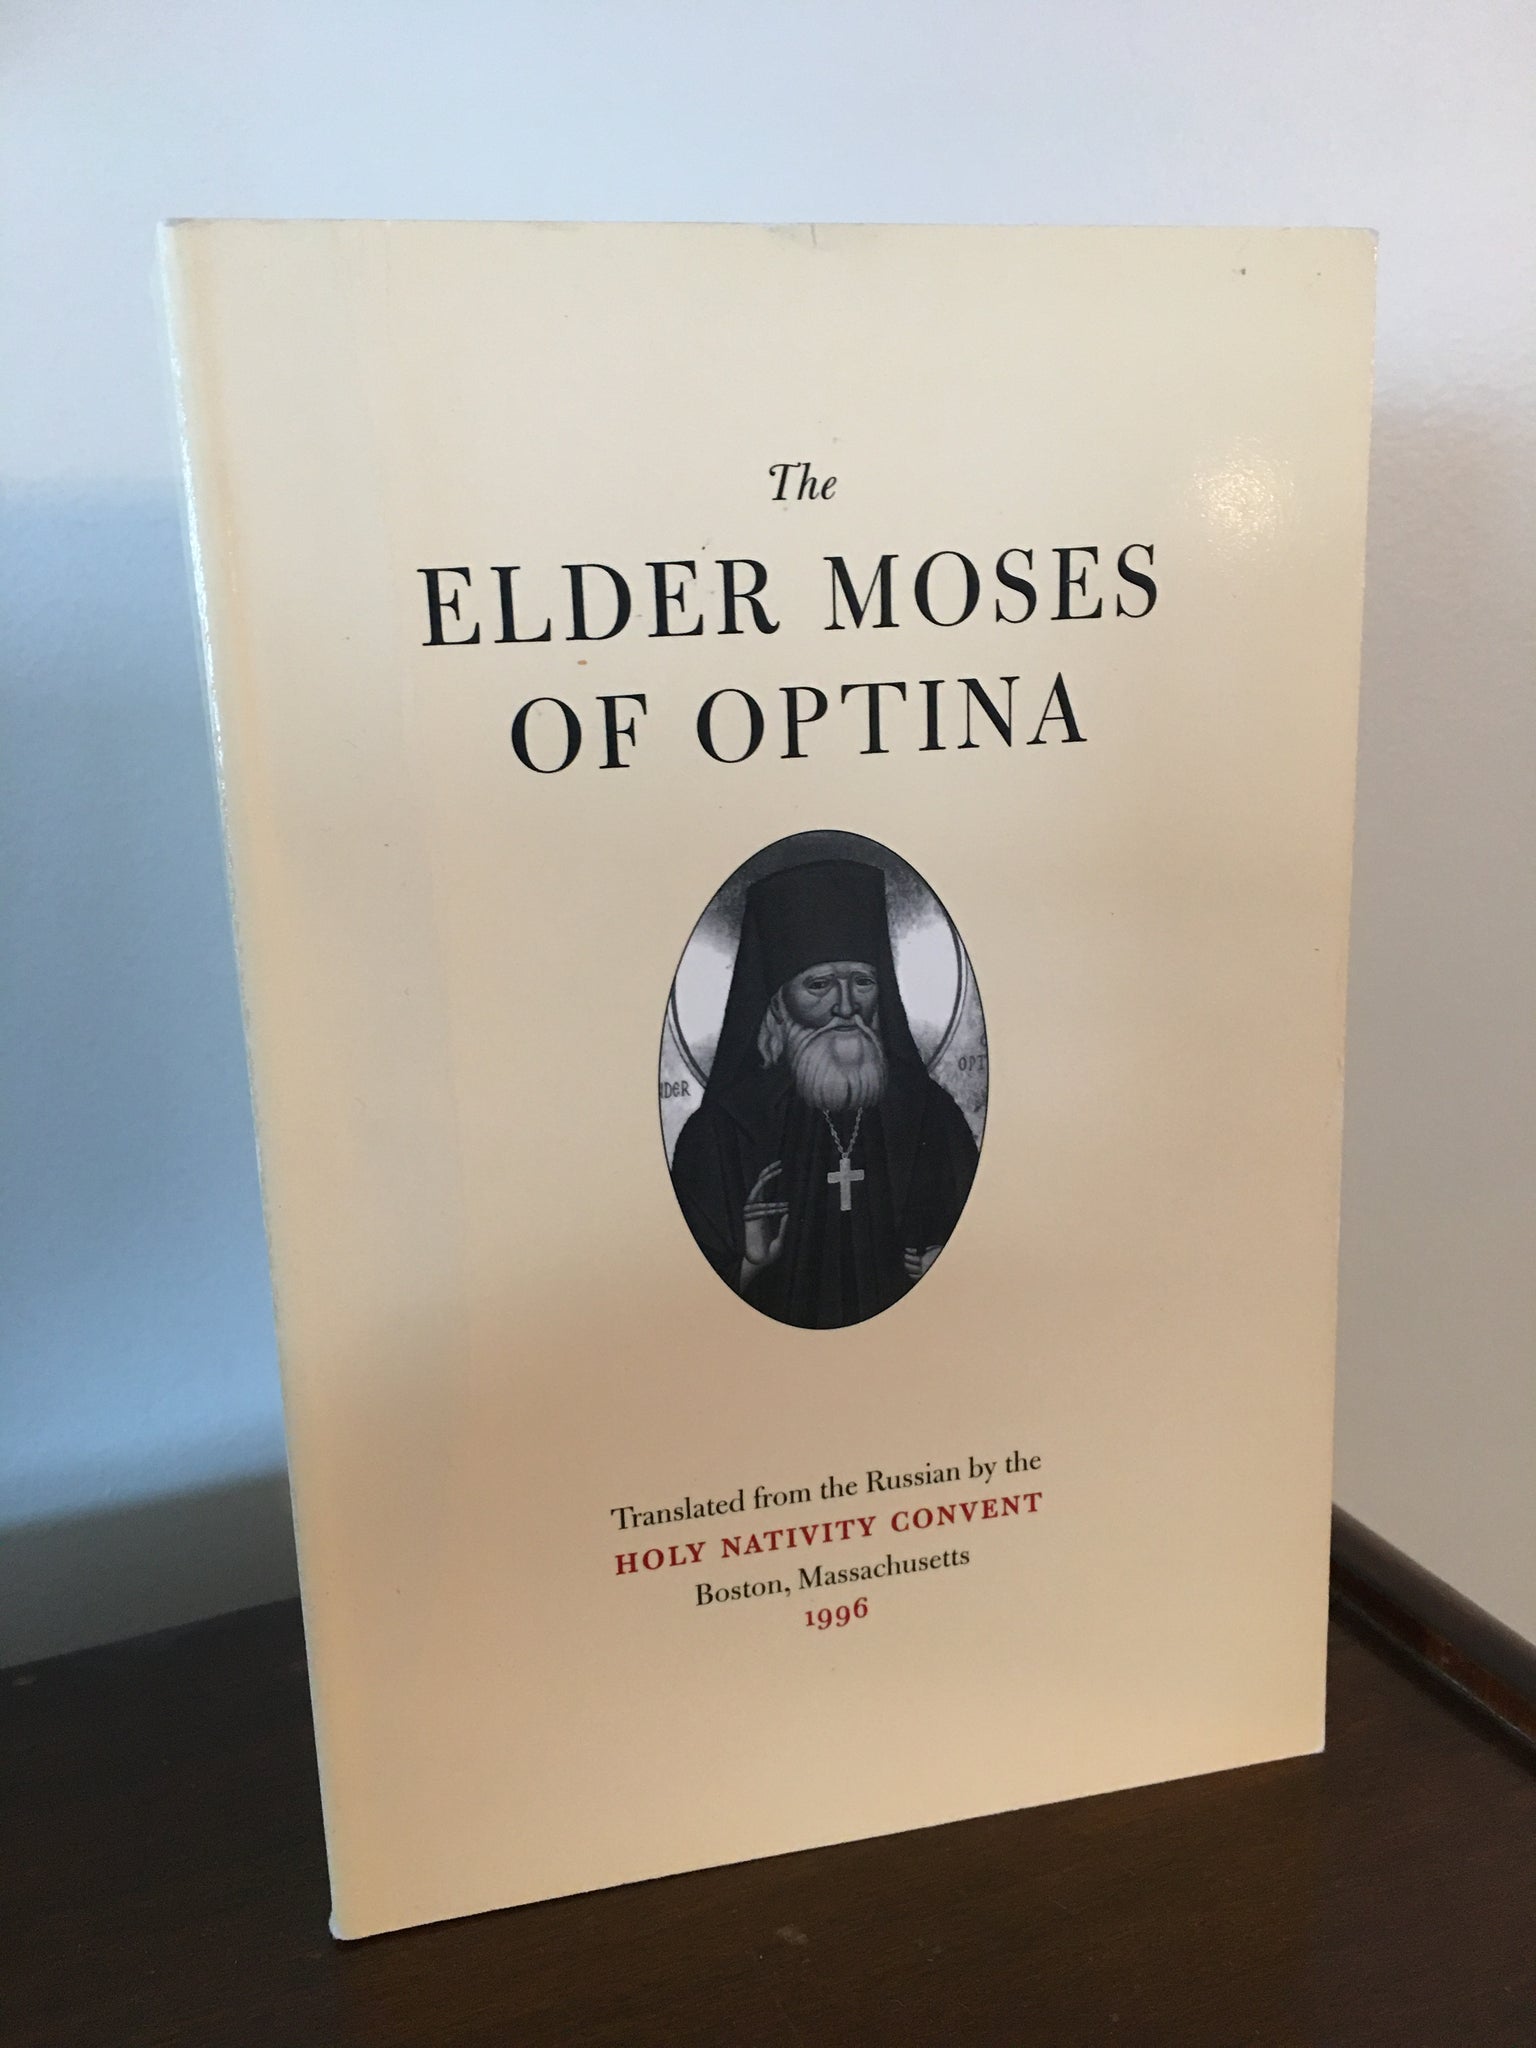 The Elder Moses of Optina